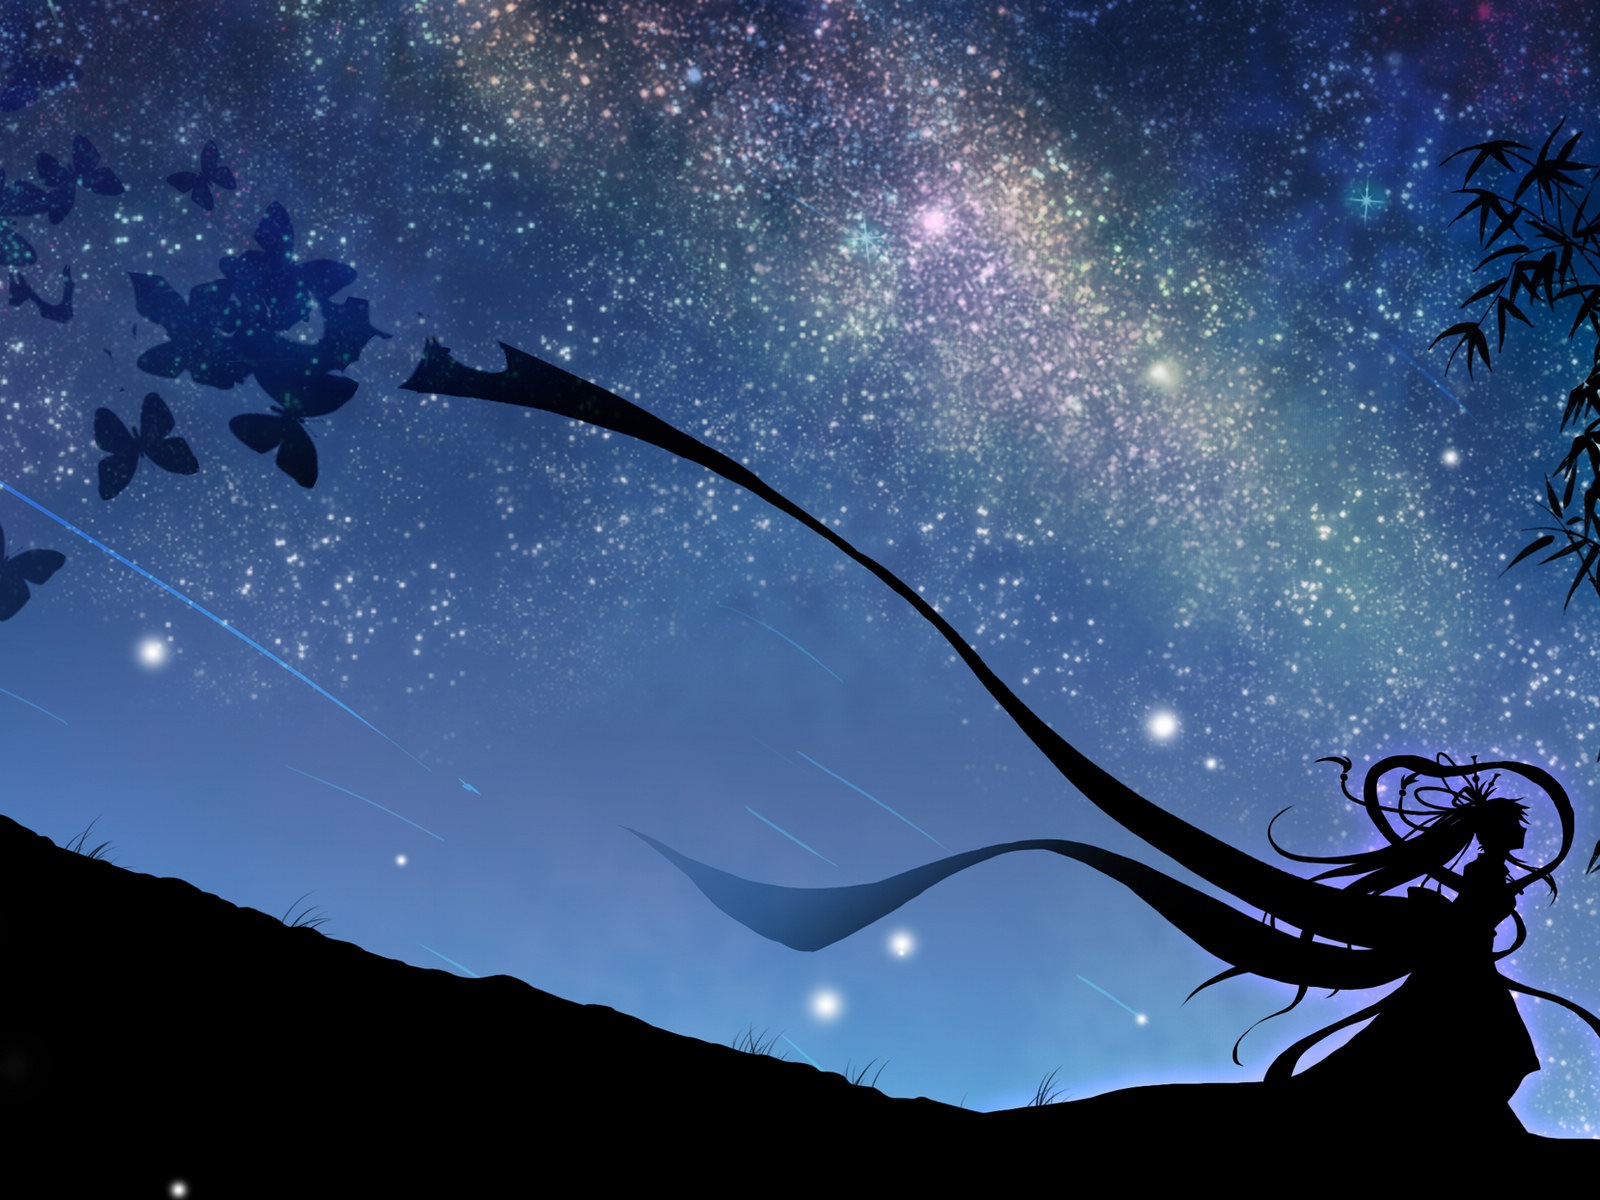 Firefly Summer beautiful anime wallpaper #8 - 1600x1200